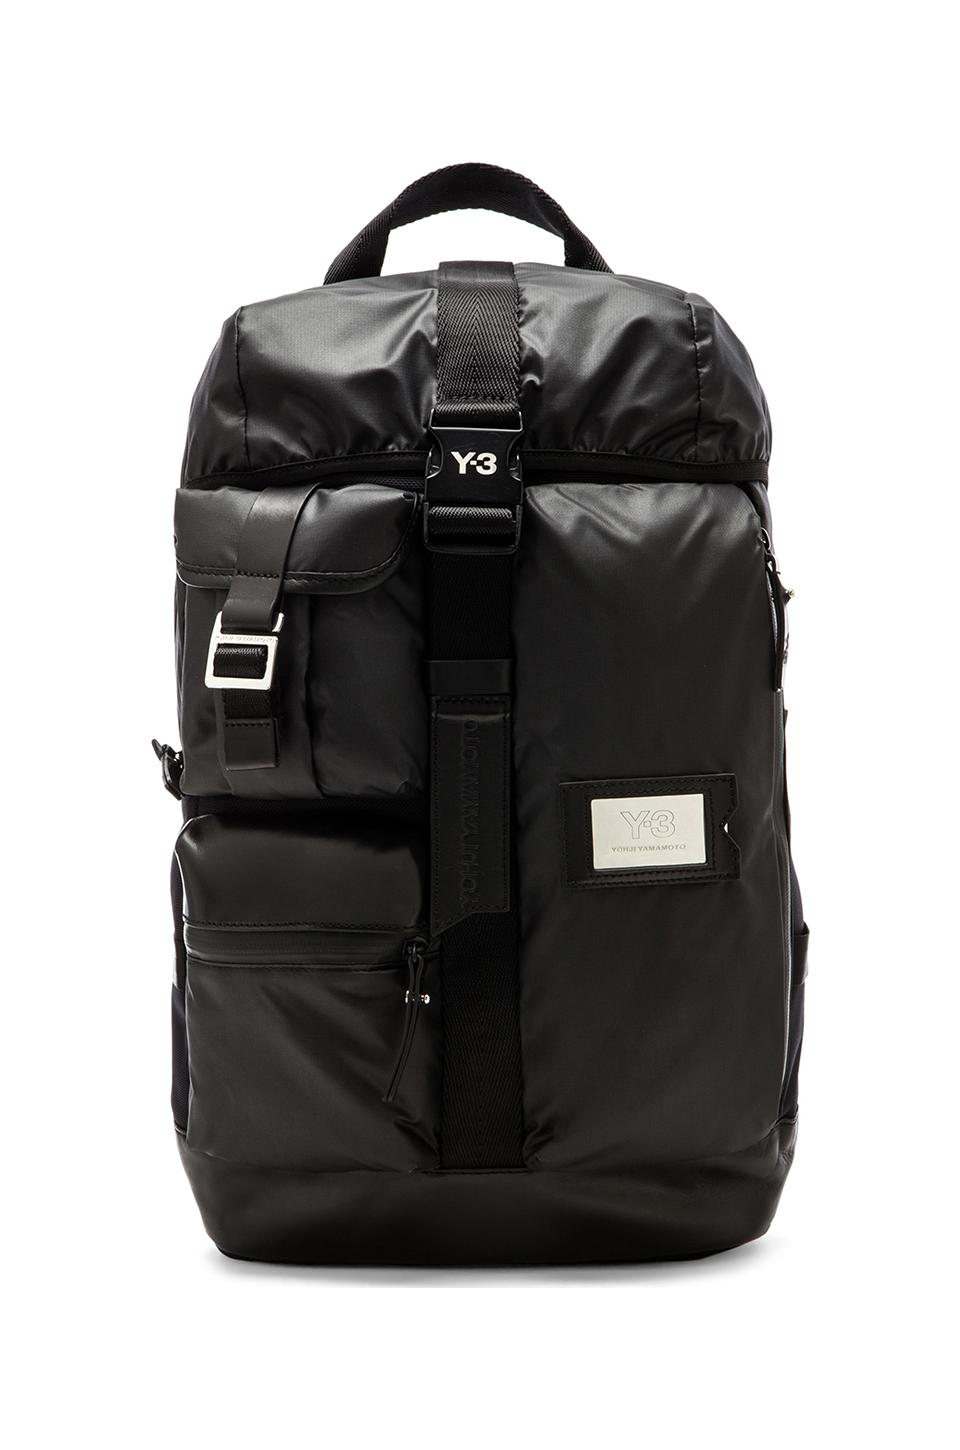 Y-3 Yohji Yamamoto Mobility Backpack in Black | REVOLVE